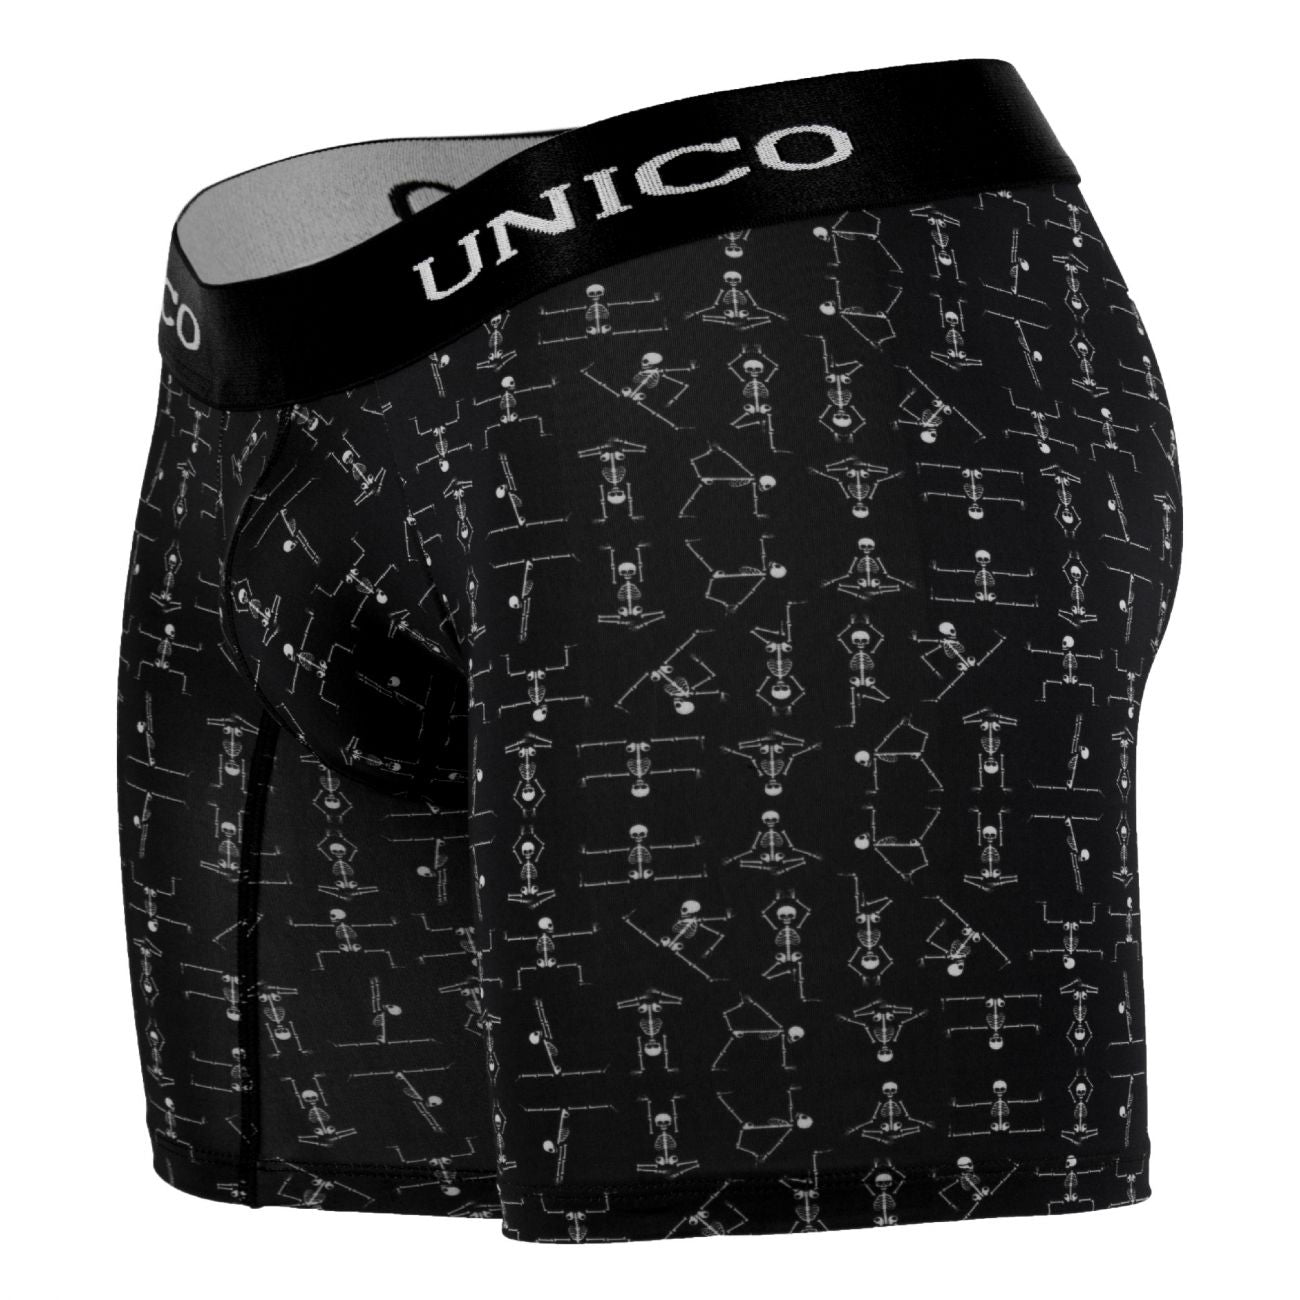 Unico 1803010021399 Boxer Briefs Skelleton Black Printed